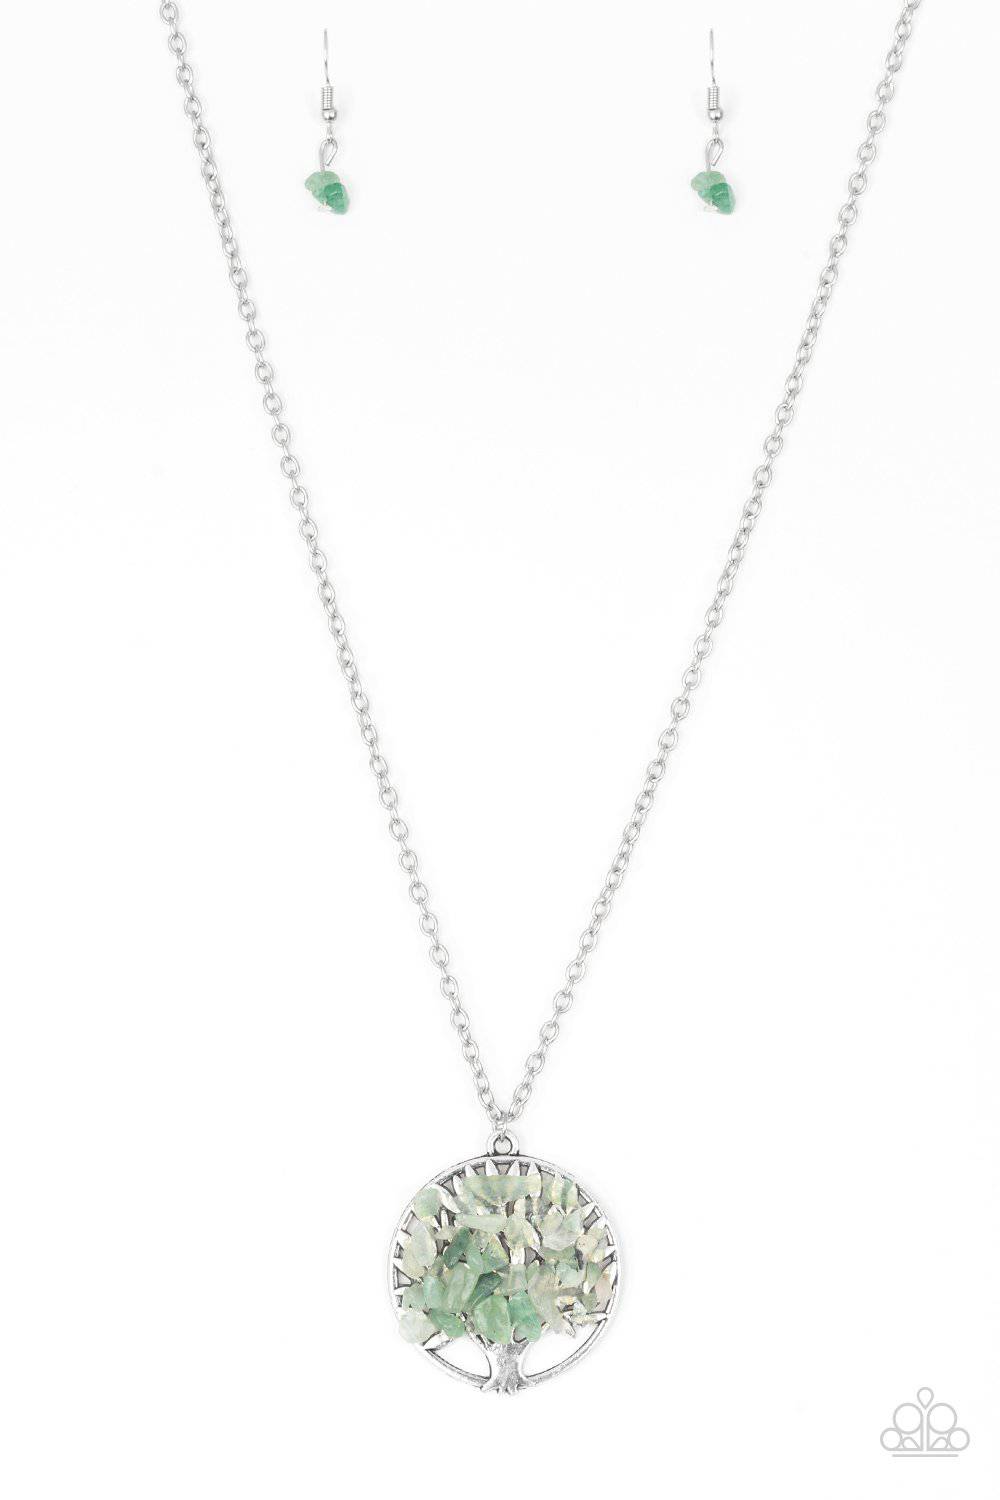 Naturally Nirvana - Green Necklace - Paparazzi Accessories - GlaMarous Titi Jewels